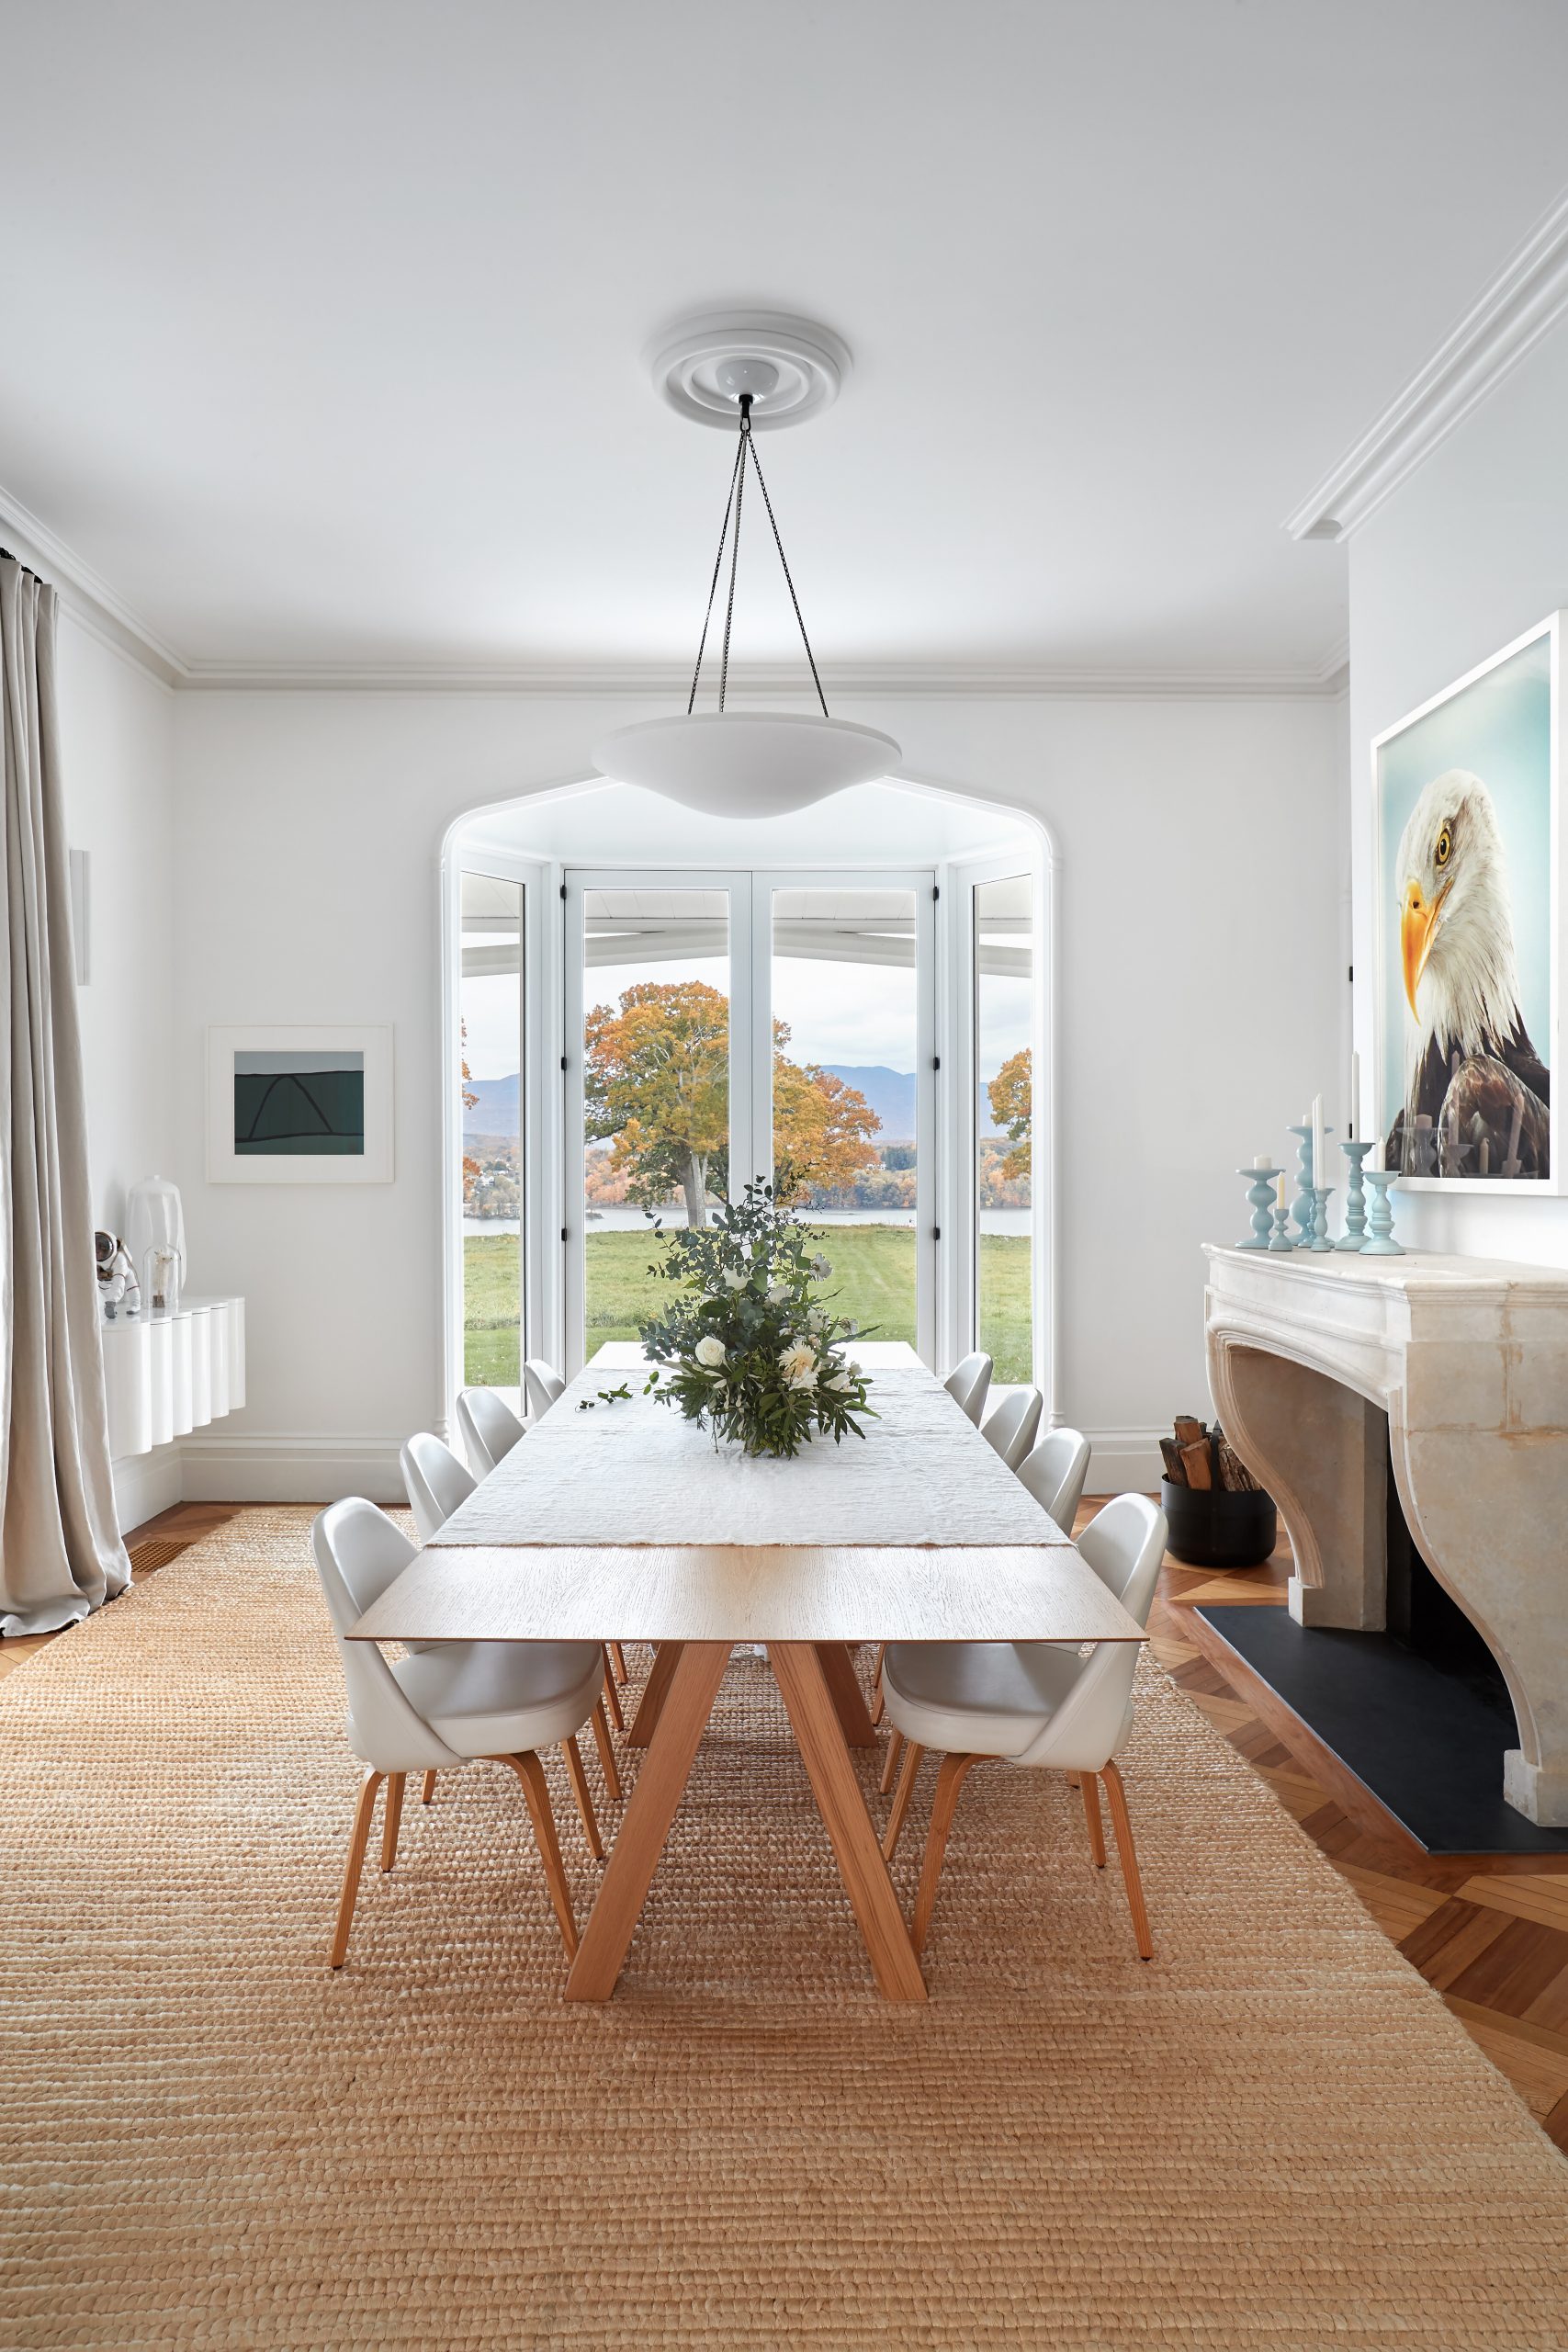 Contemporary Dining room design - Ghislaine Viñas The Radicalist Design World home inspiration ideas